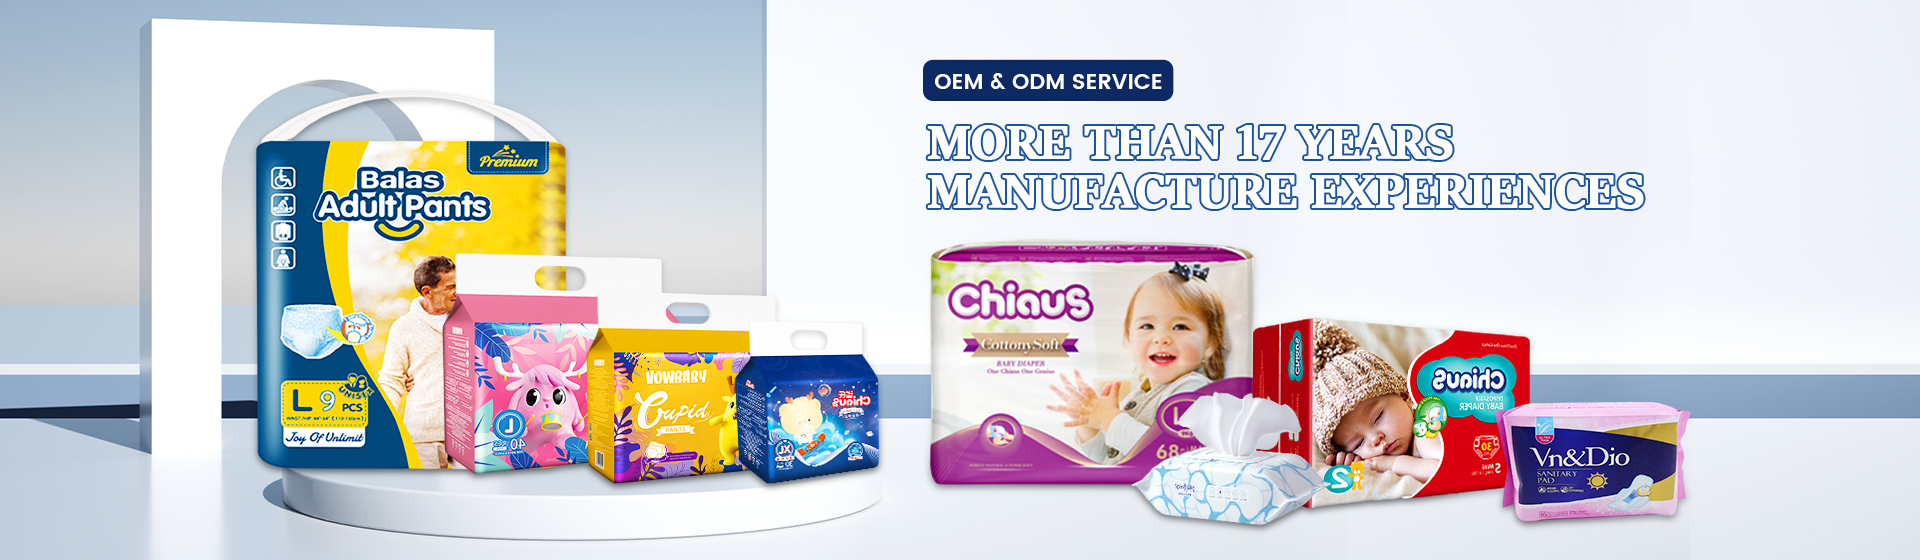 Chiaus 제조 기저귀 유통업체는 해외 시장에서 OEM 서비스를 이용할 수 있기를 원했습니다.